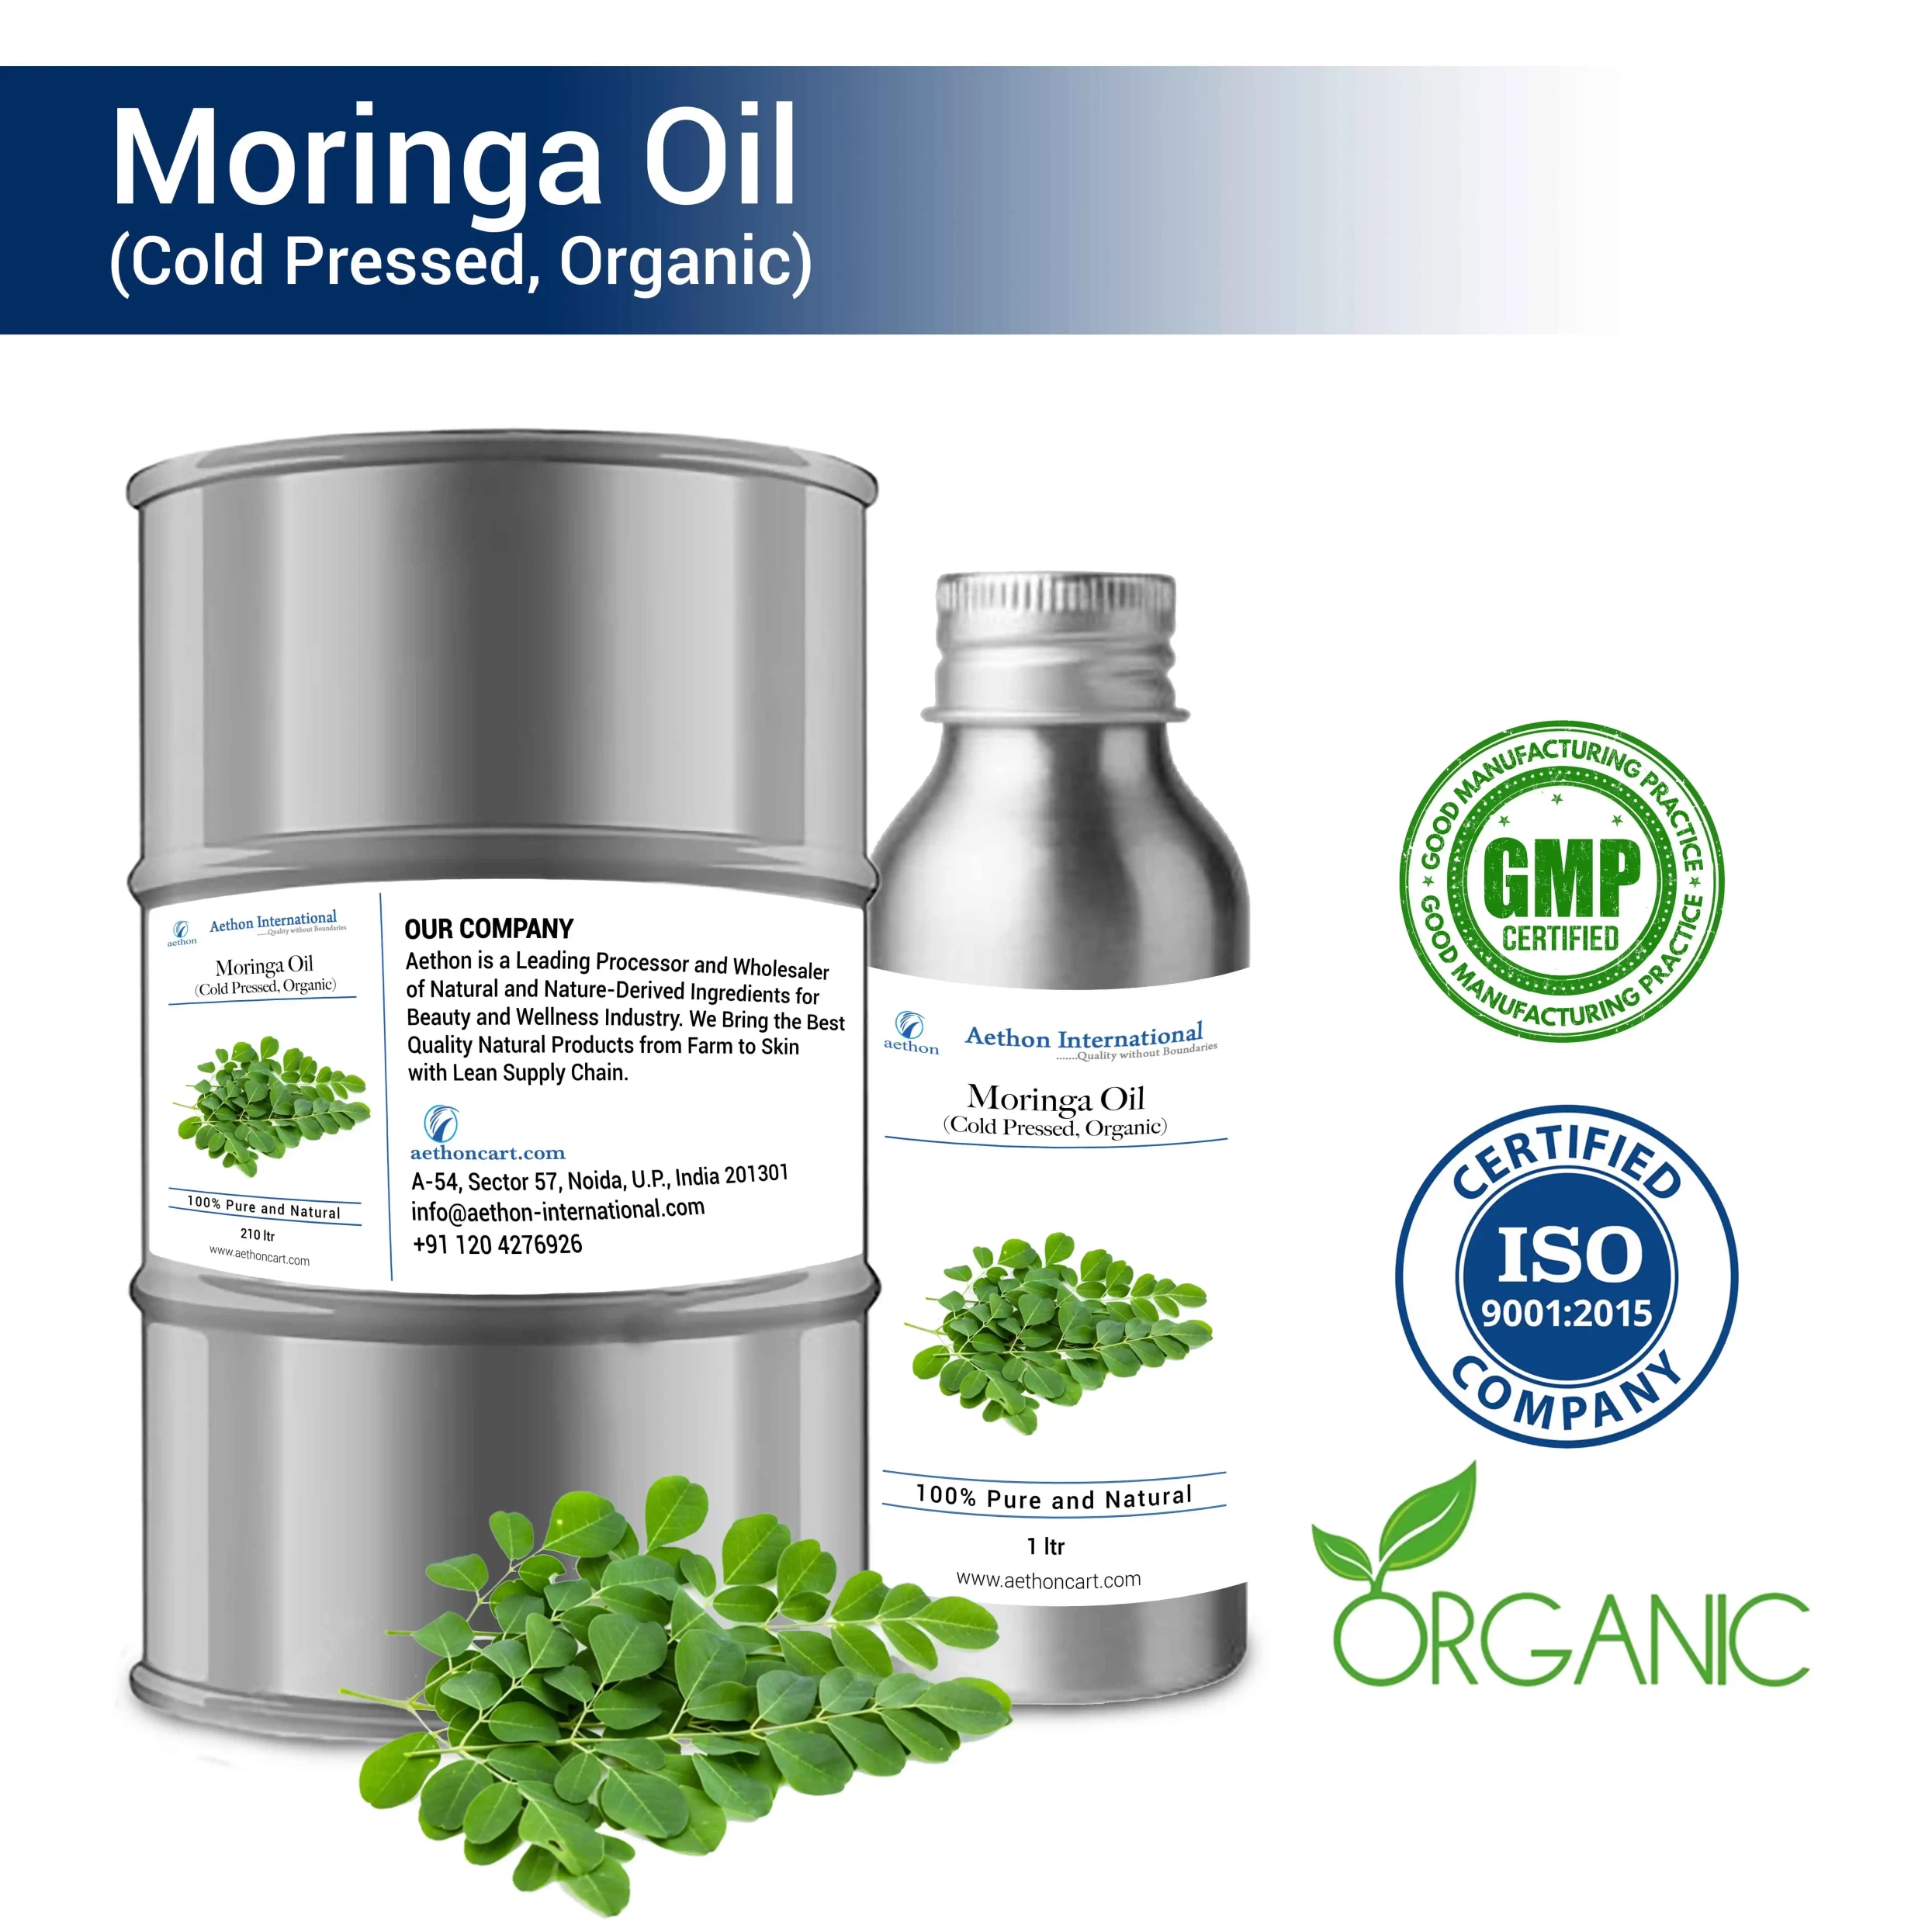 Moringa Oil (Cold Pressed, Organic)